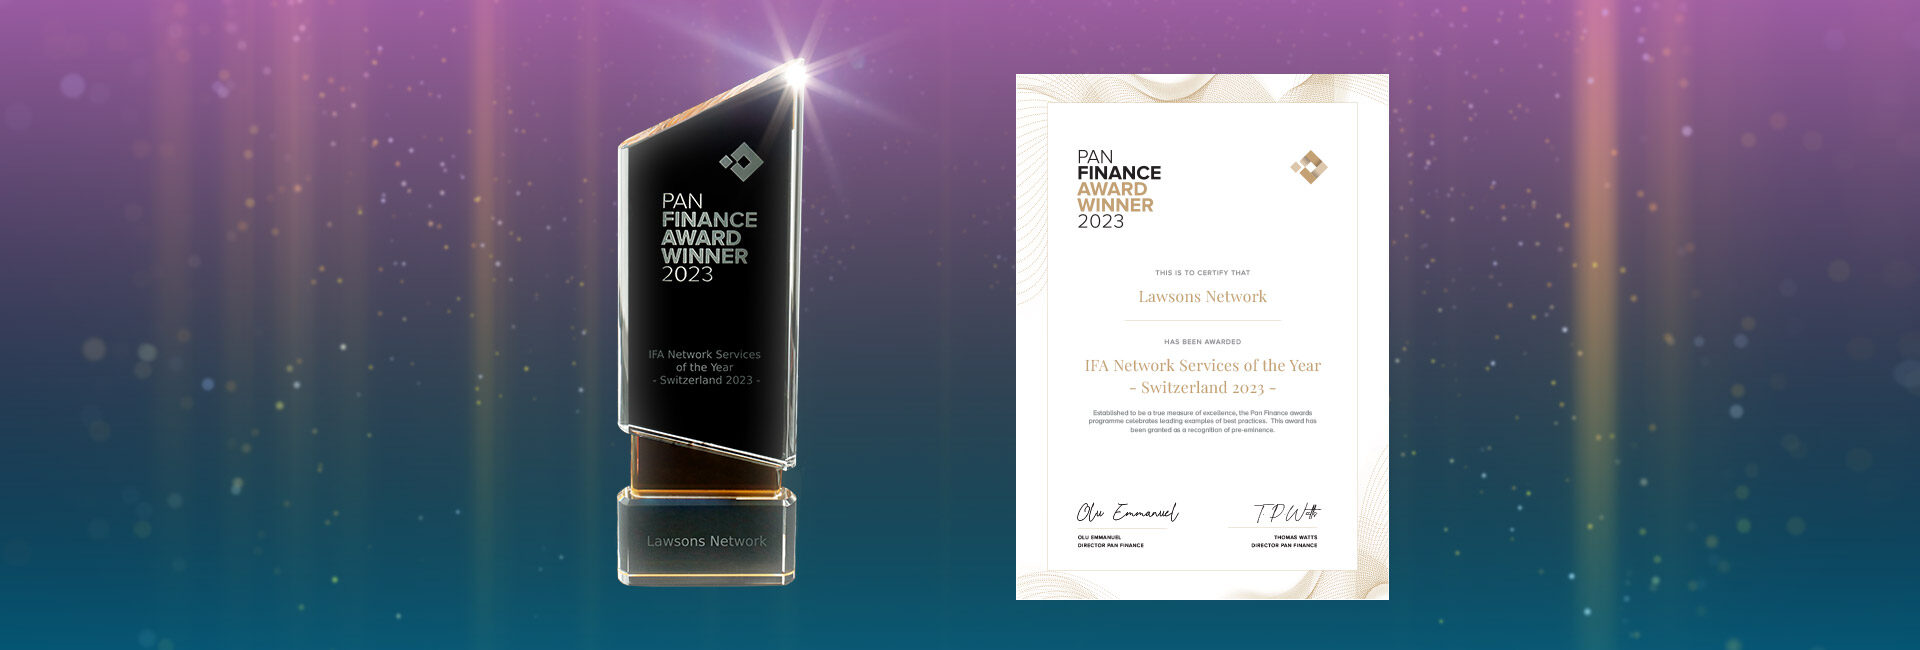 Lawsons Network Celebrates Pan Finance Award Win